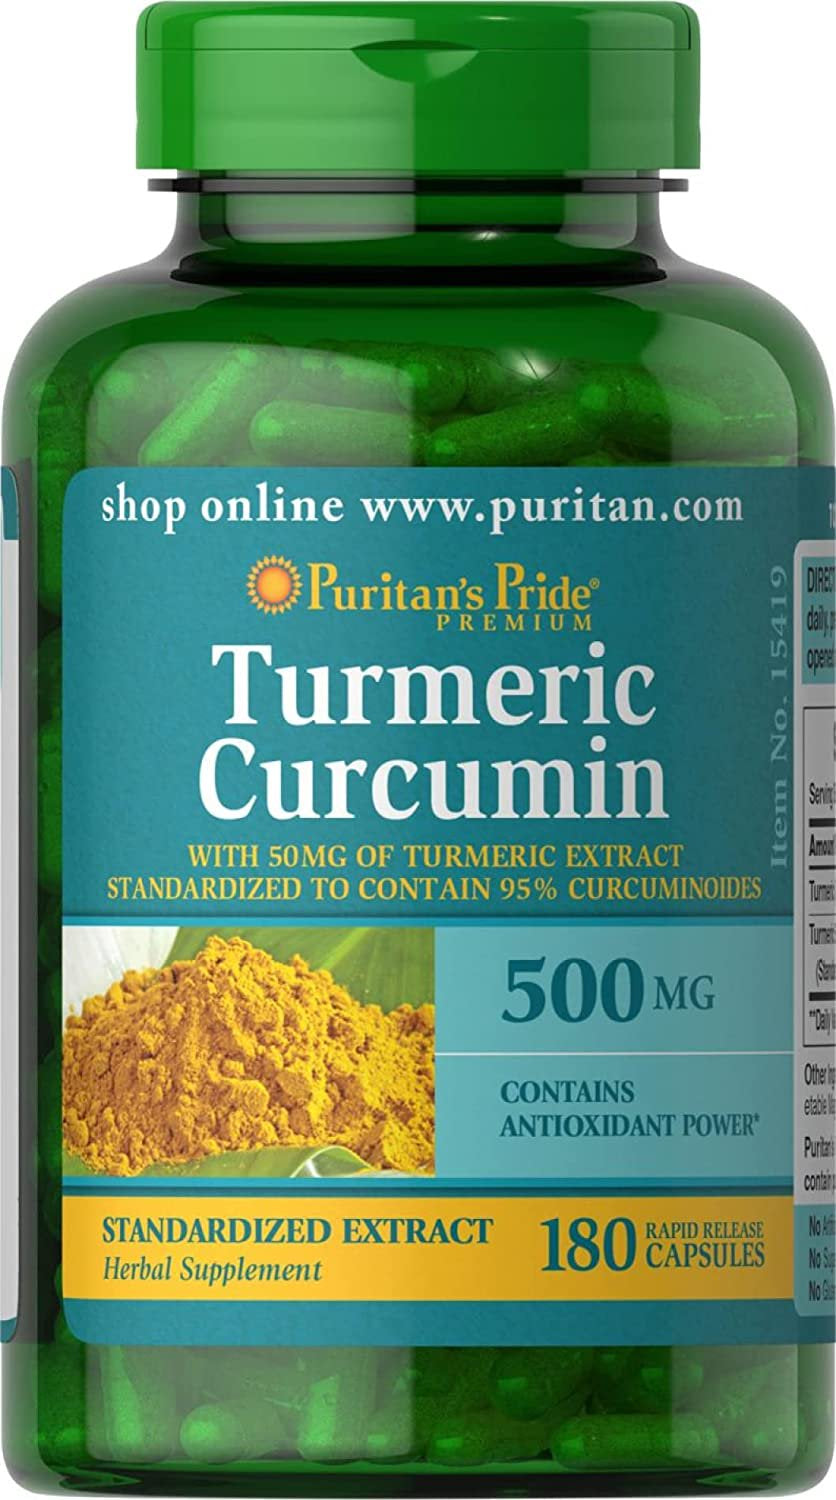 Puritan'S Pride Turmeric Curcumin 500 Mg Contains Antioxidants-180 Capsules